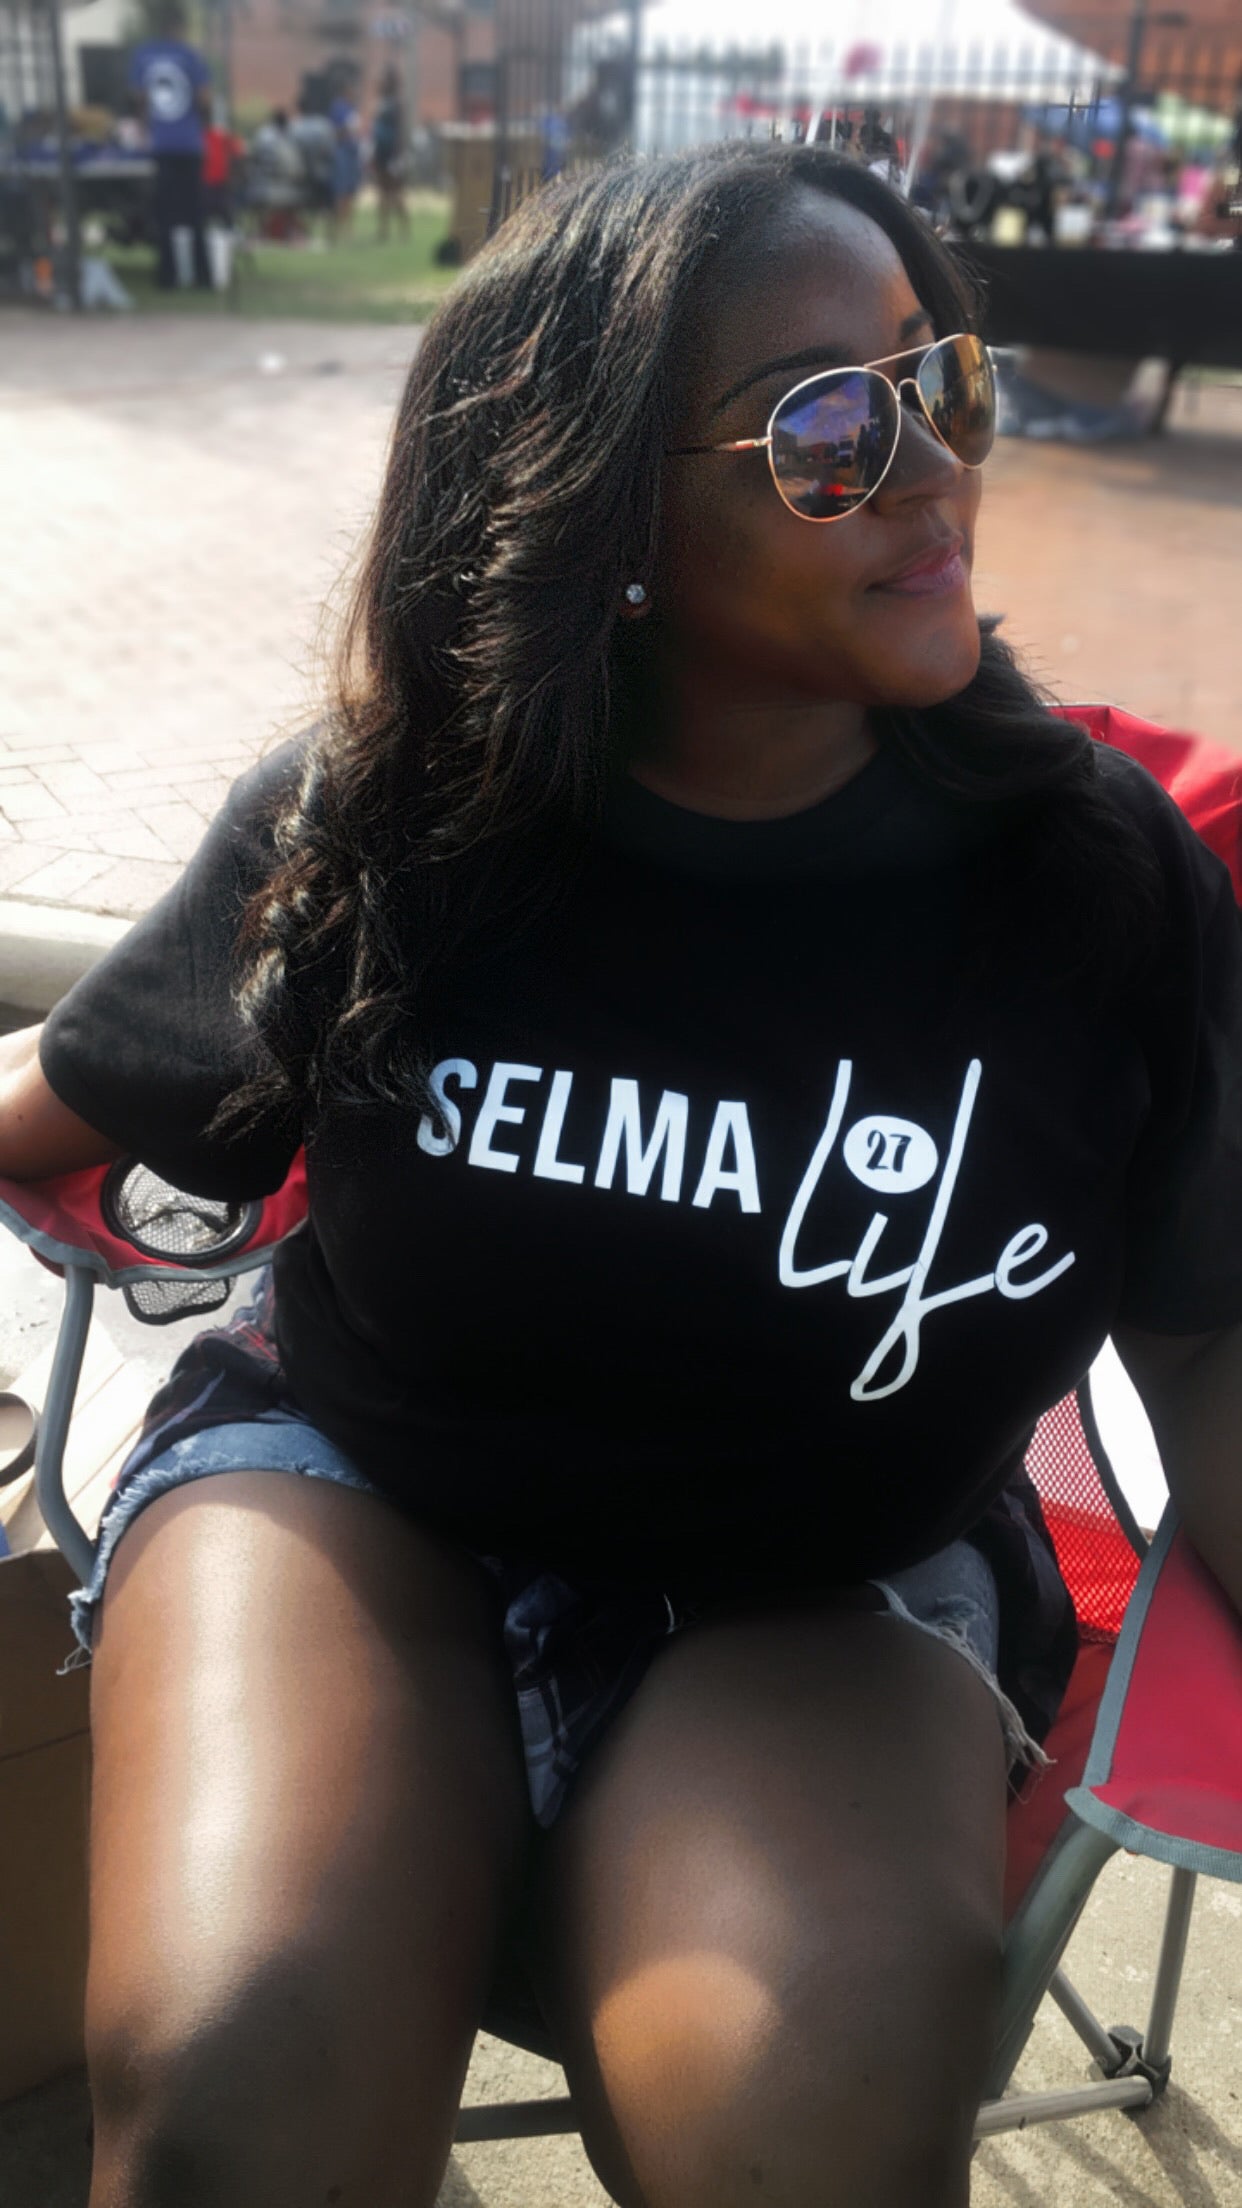 Selma Life!